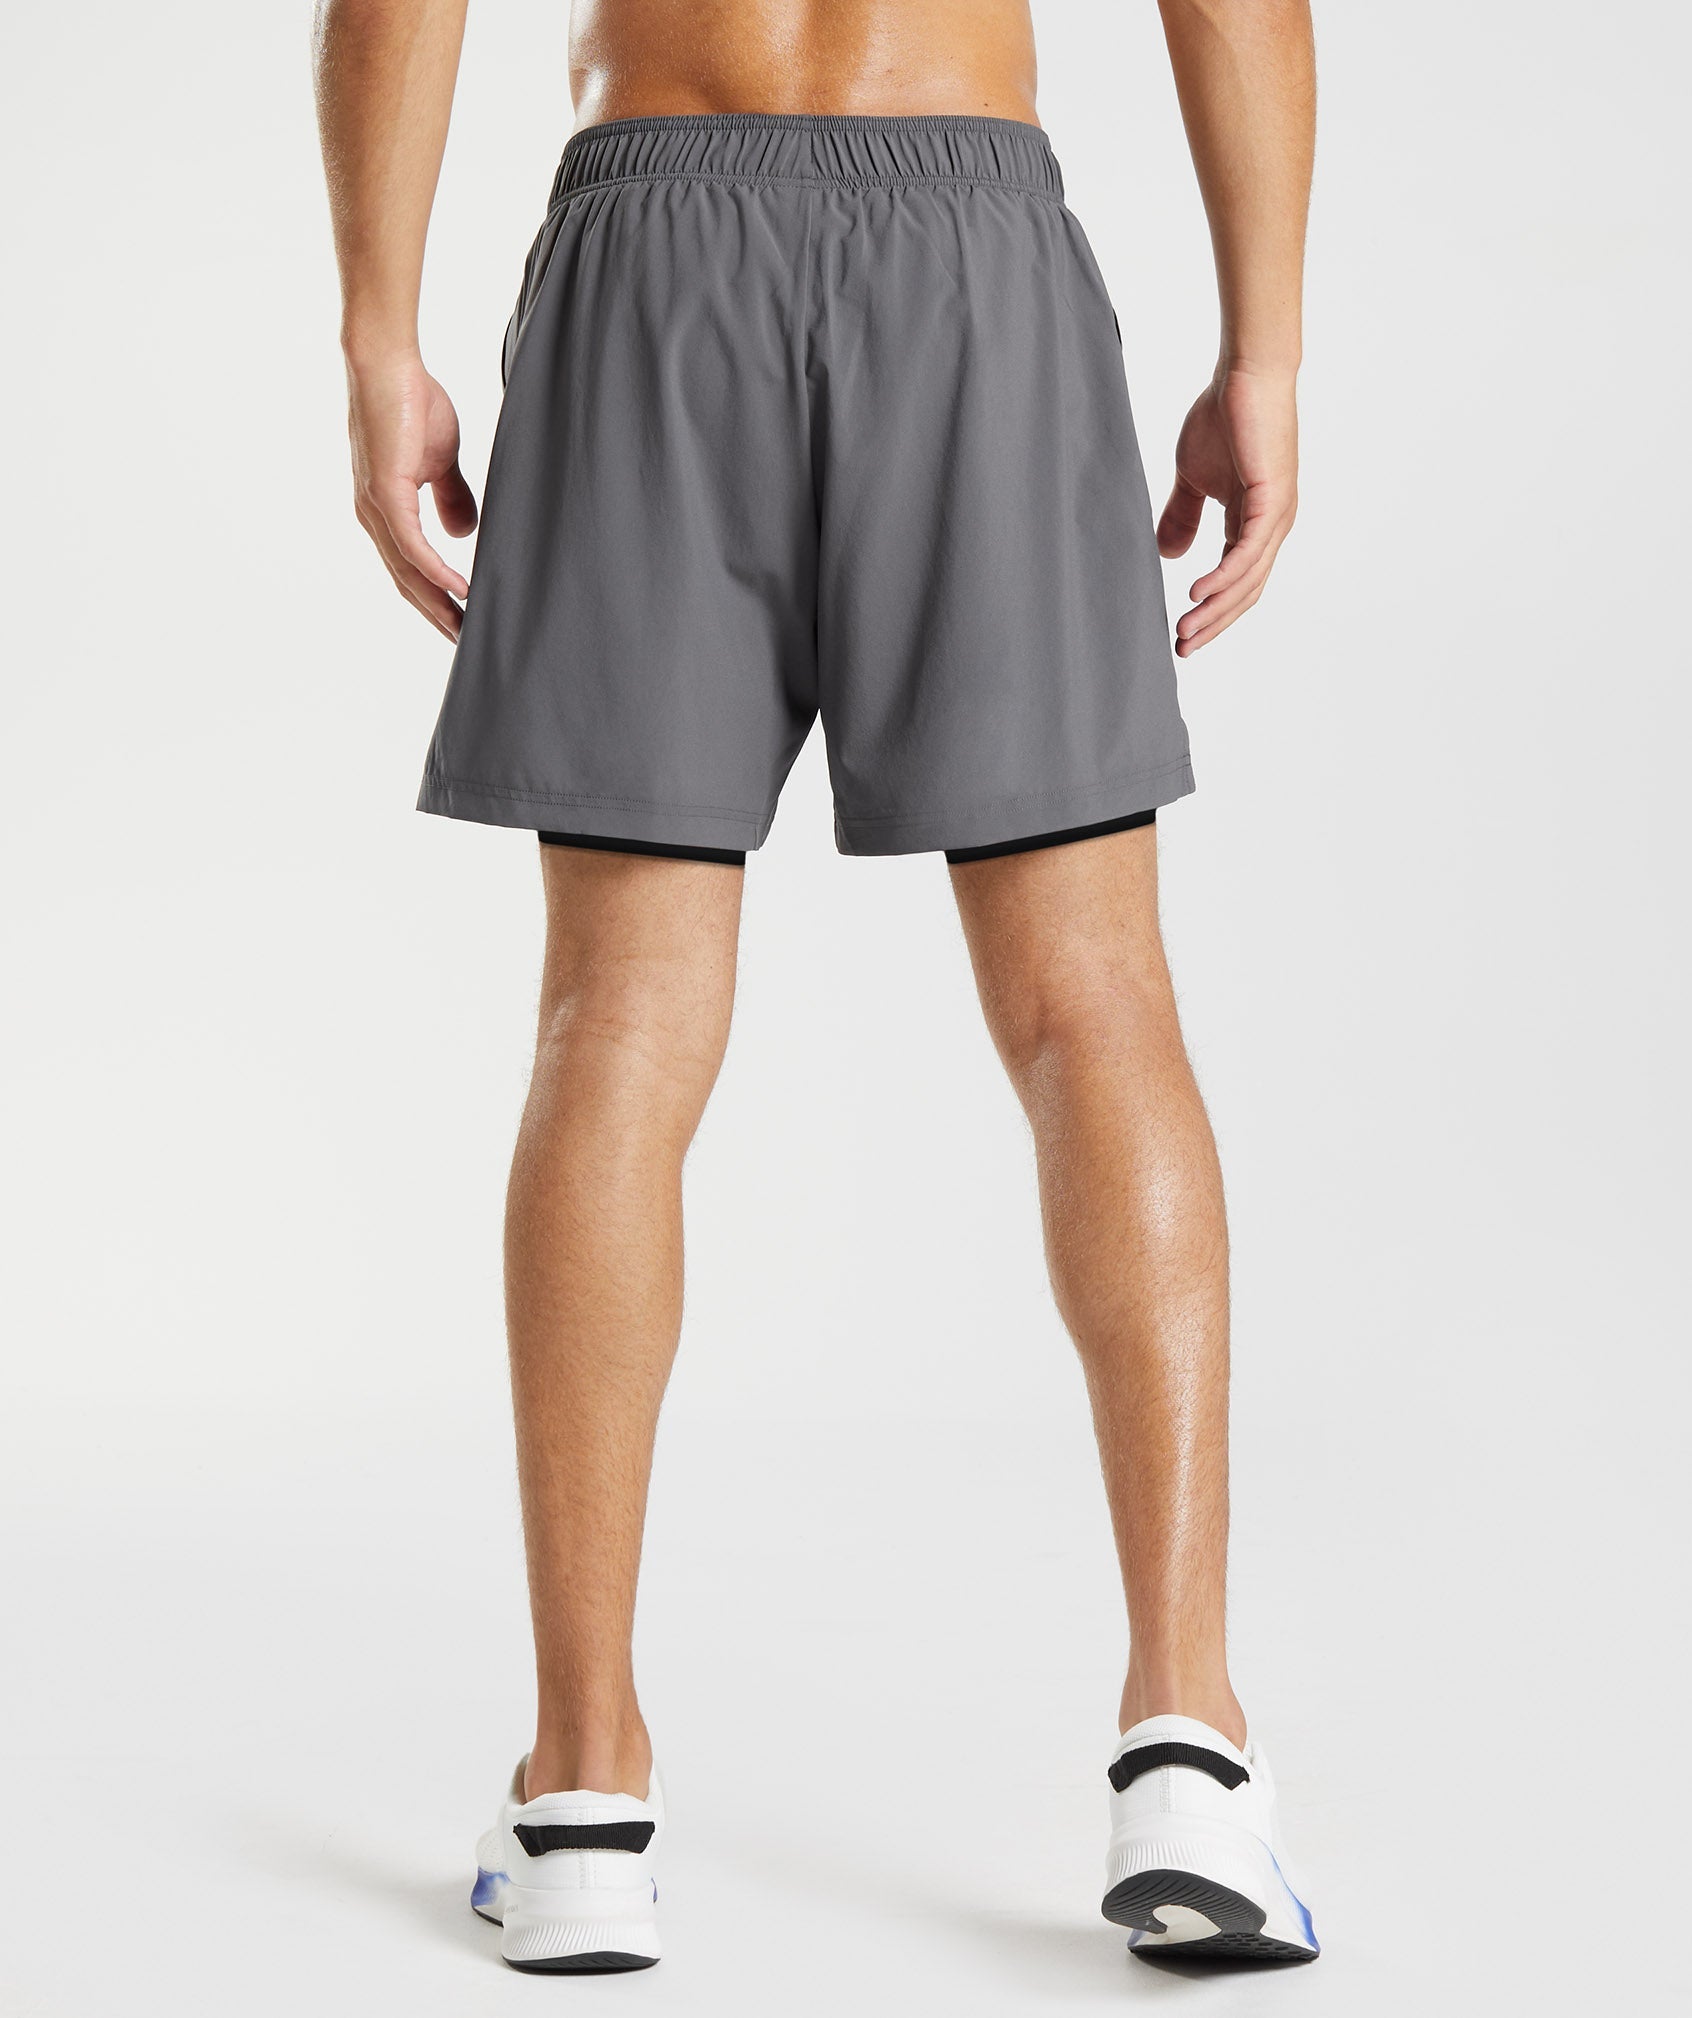 Sport 7" 2 In 1 Shorts in Silhouette Grey/Black